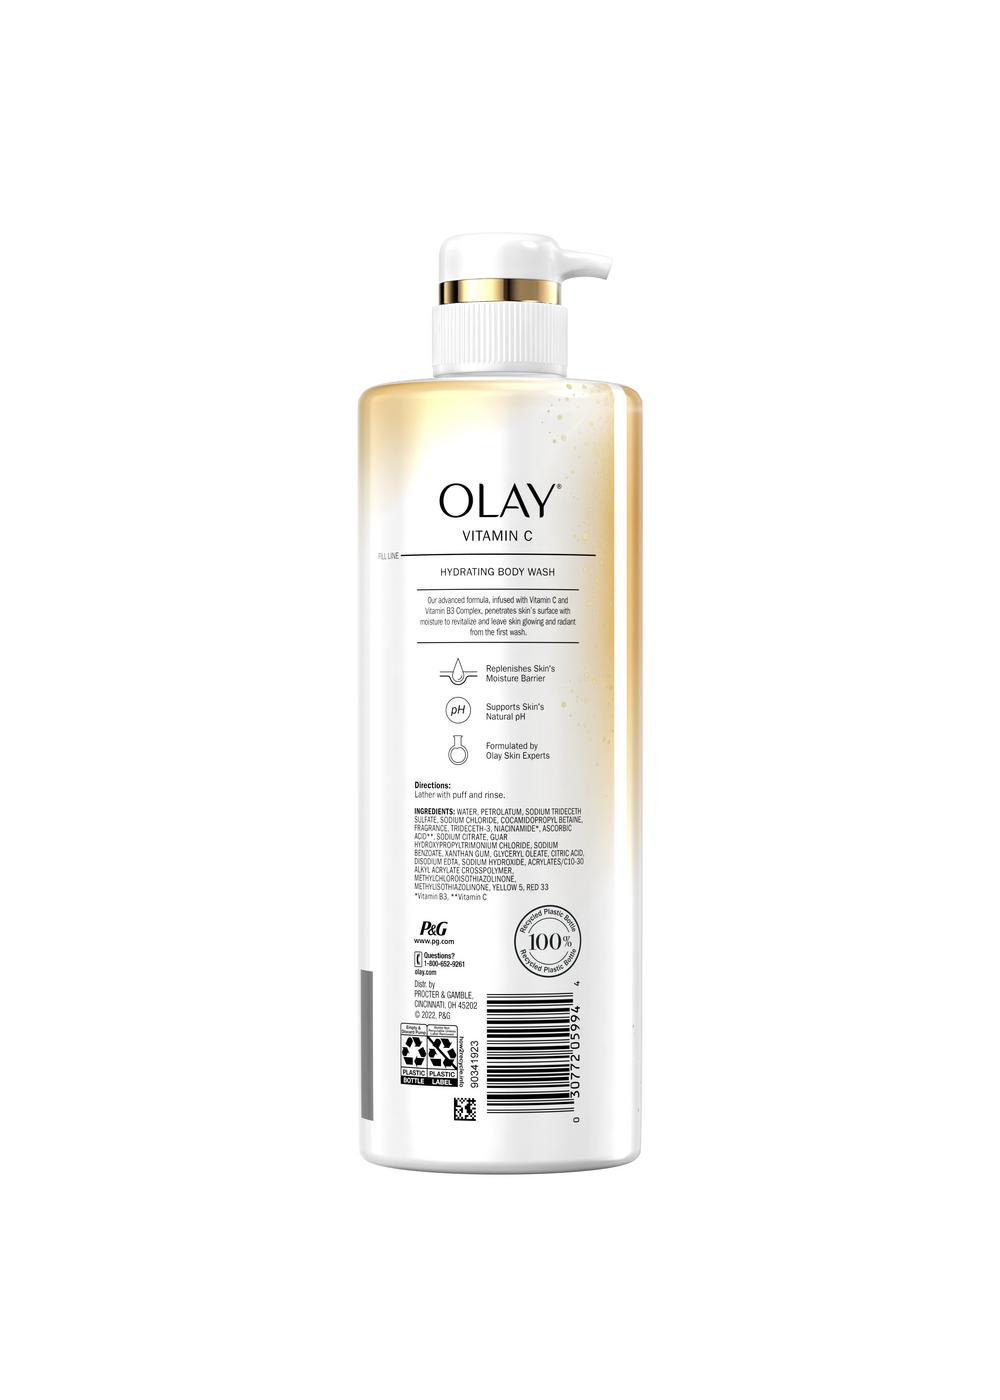 Olay Hydrating Body Wash - Vitamin C; image 2 of 2